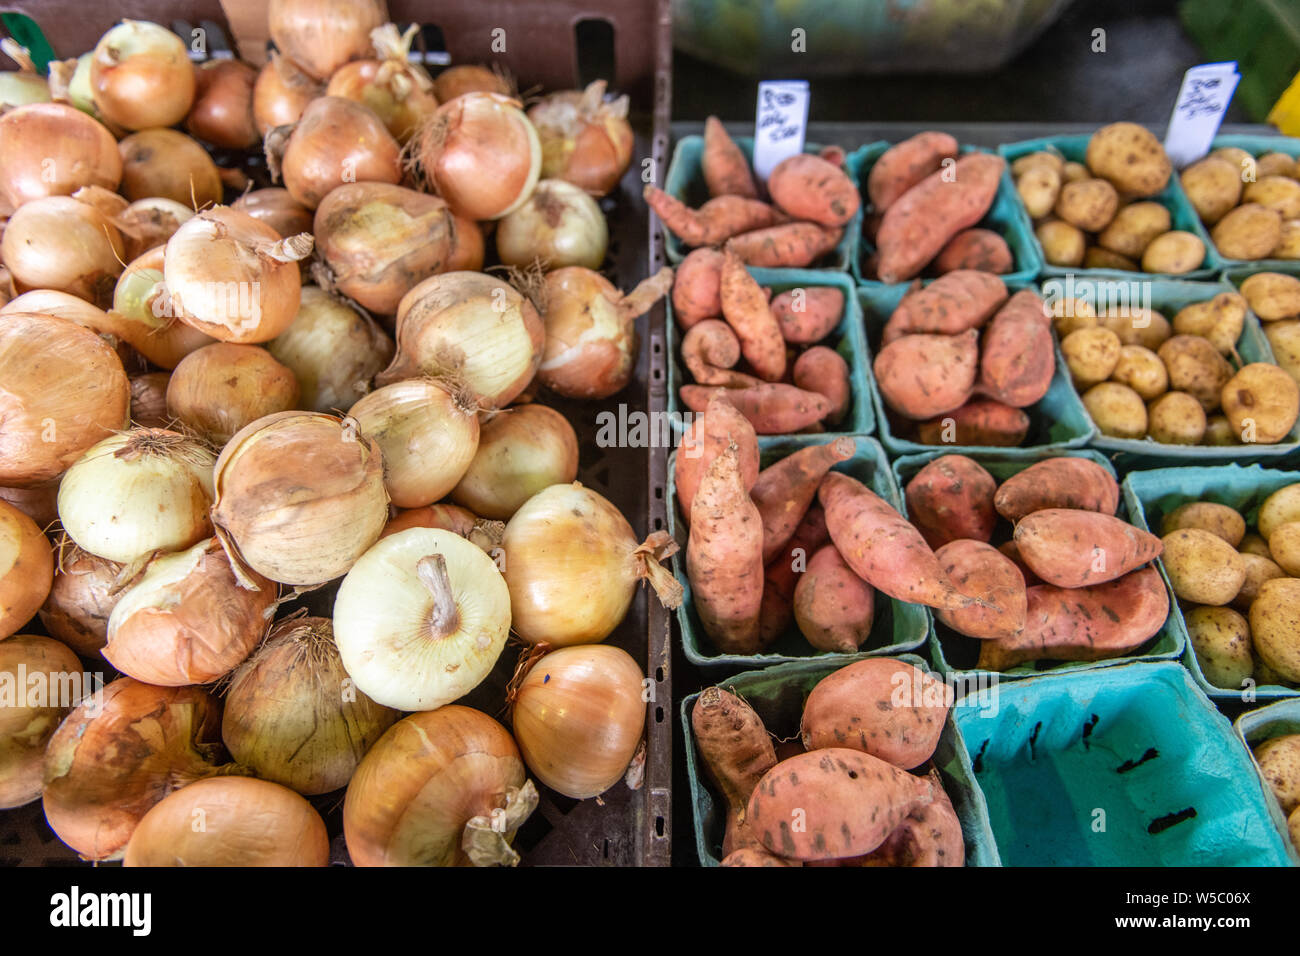 Onions (Allium cepa), sweet potatoes (Ipomoea batatas),  and potatoes (Solanum tuberosum) at a farmers market in Baltimore, MD Stock Photo